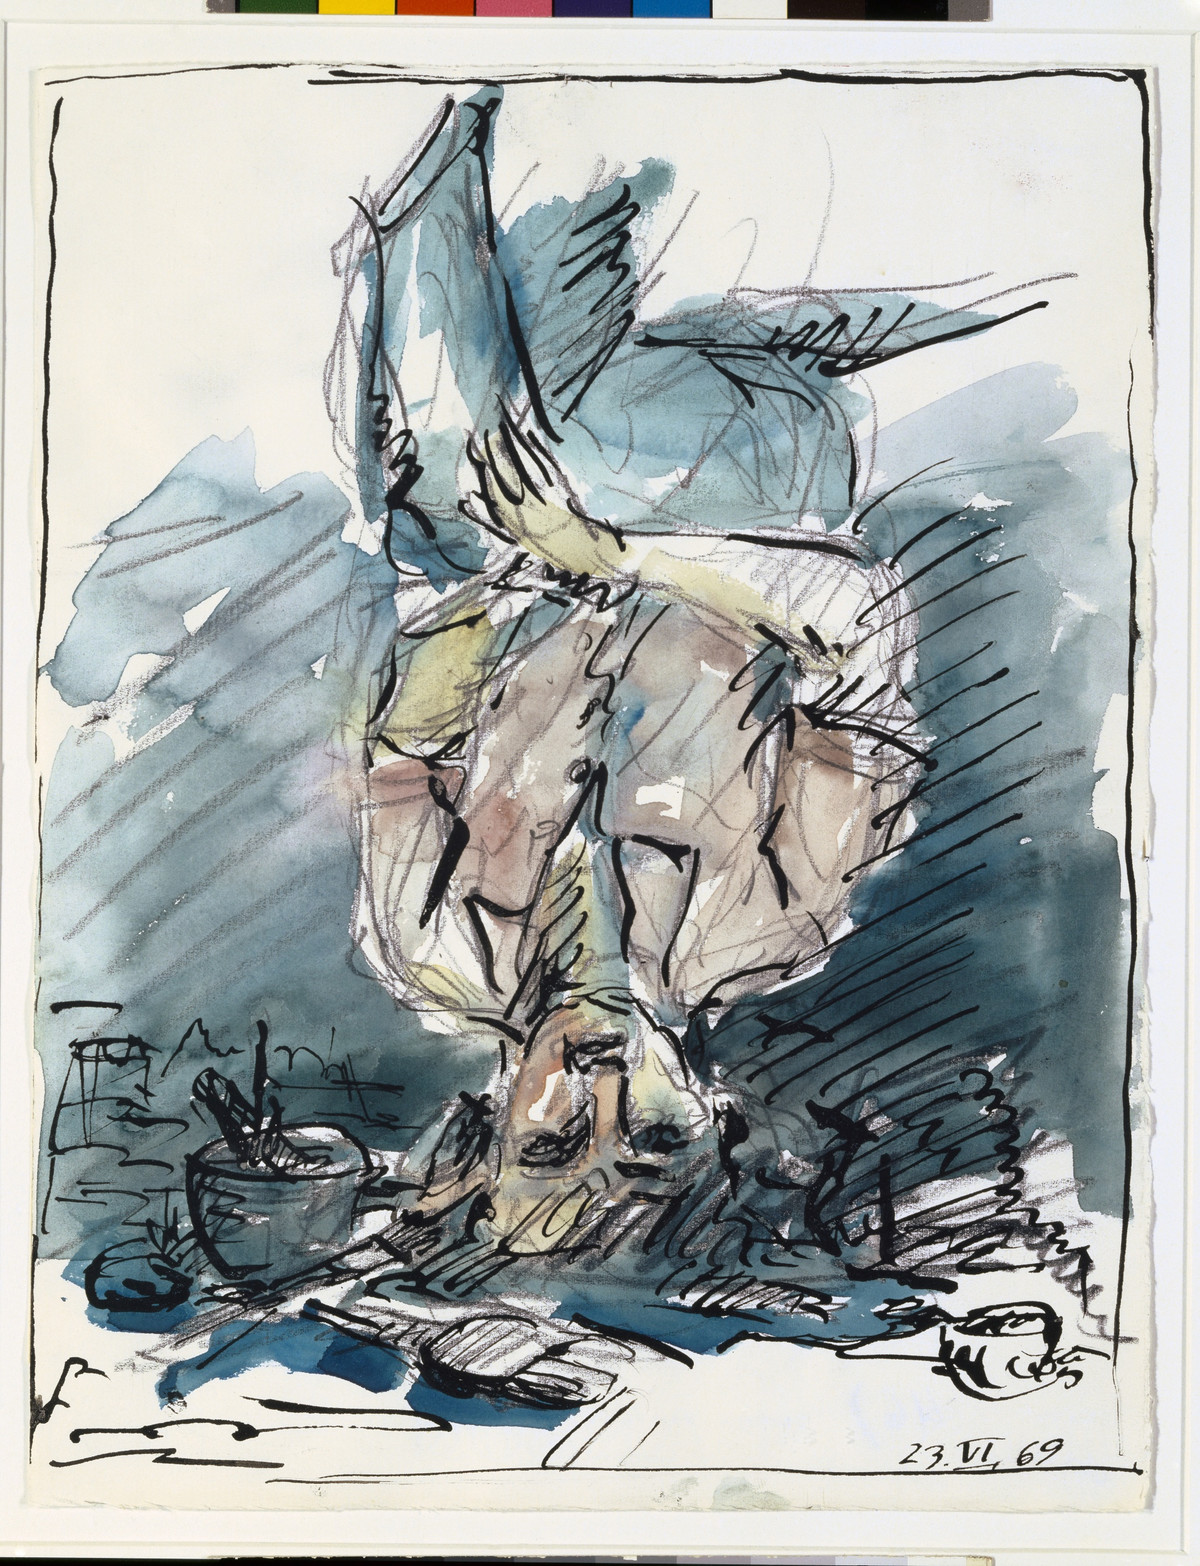 Georg Baselitz: Maler, 23. Juni 1969, Bleistift, Tusche, Aquarell, 32.4 x 25.1 cm, Kunstmuseum Basel – Karl August Burckhardt-Koechlin-Fonds (Geschenk des Künstlers), Kunstmuseum Basel, Martin P. Bühler